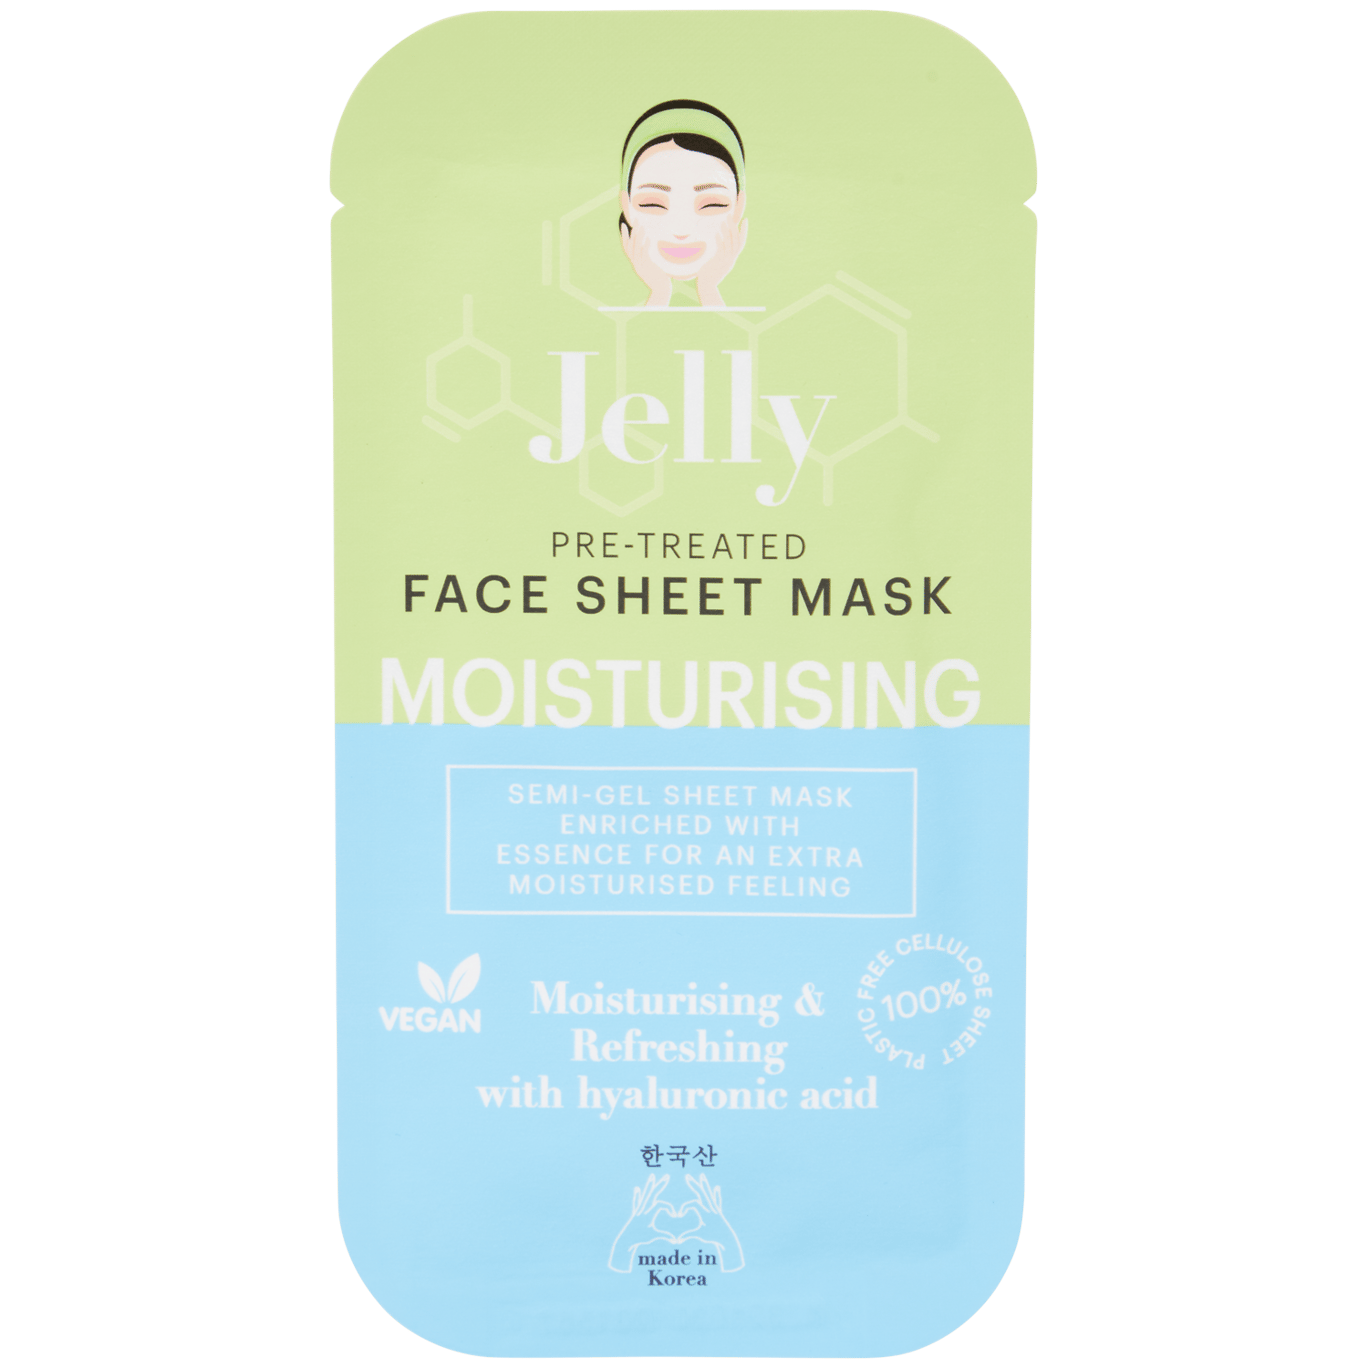 Jelly Gesichtsmaske